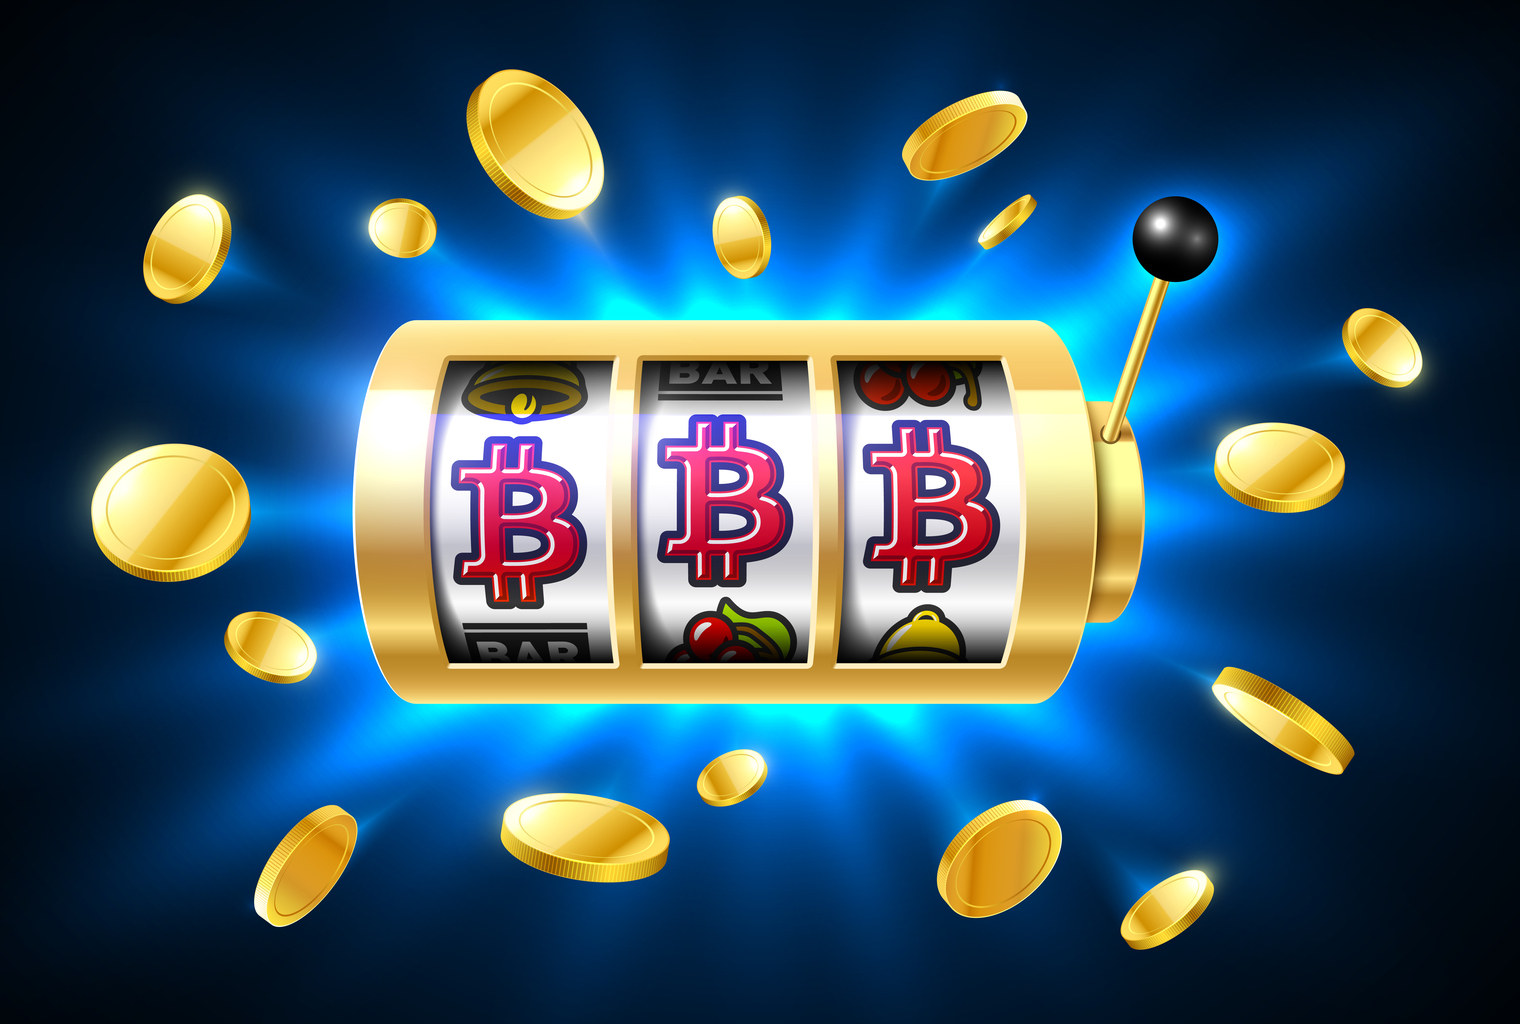 Casino app where you win real money